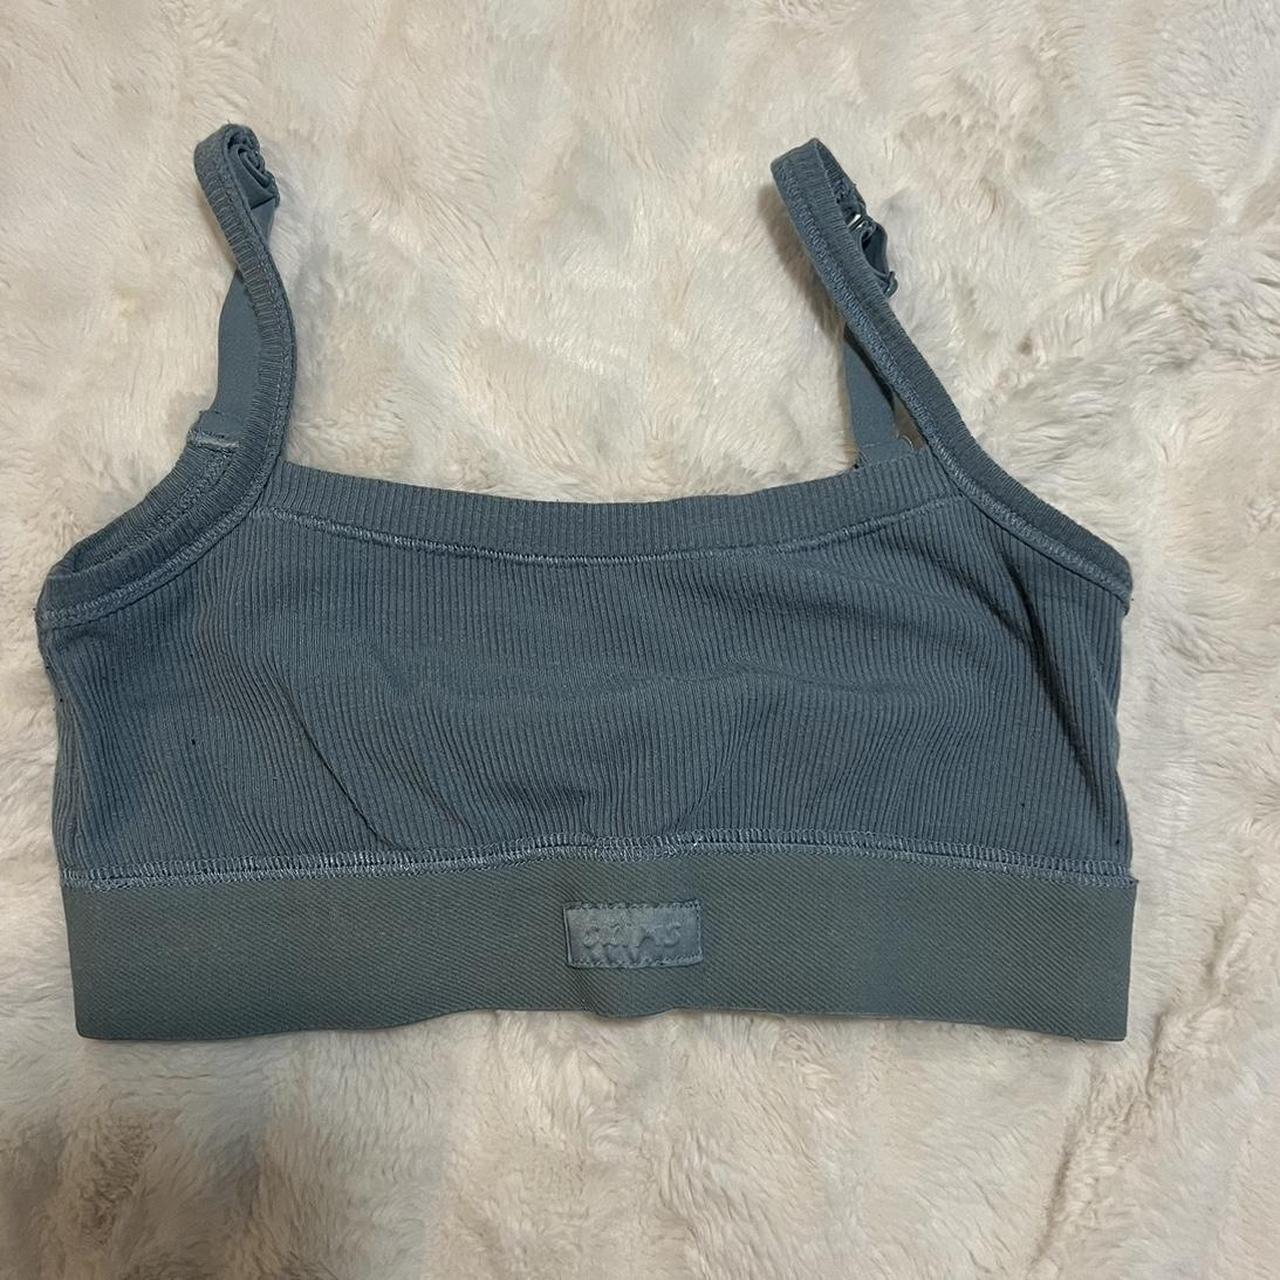 Skims fits everybody tshirt bra in 32D Brand new - Depop